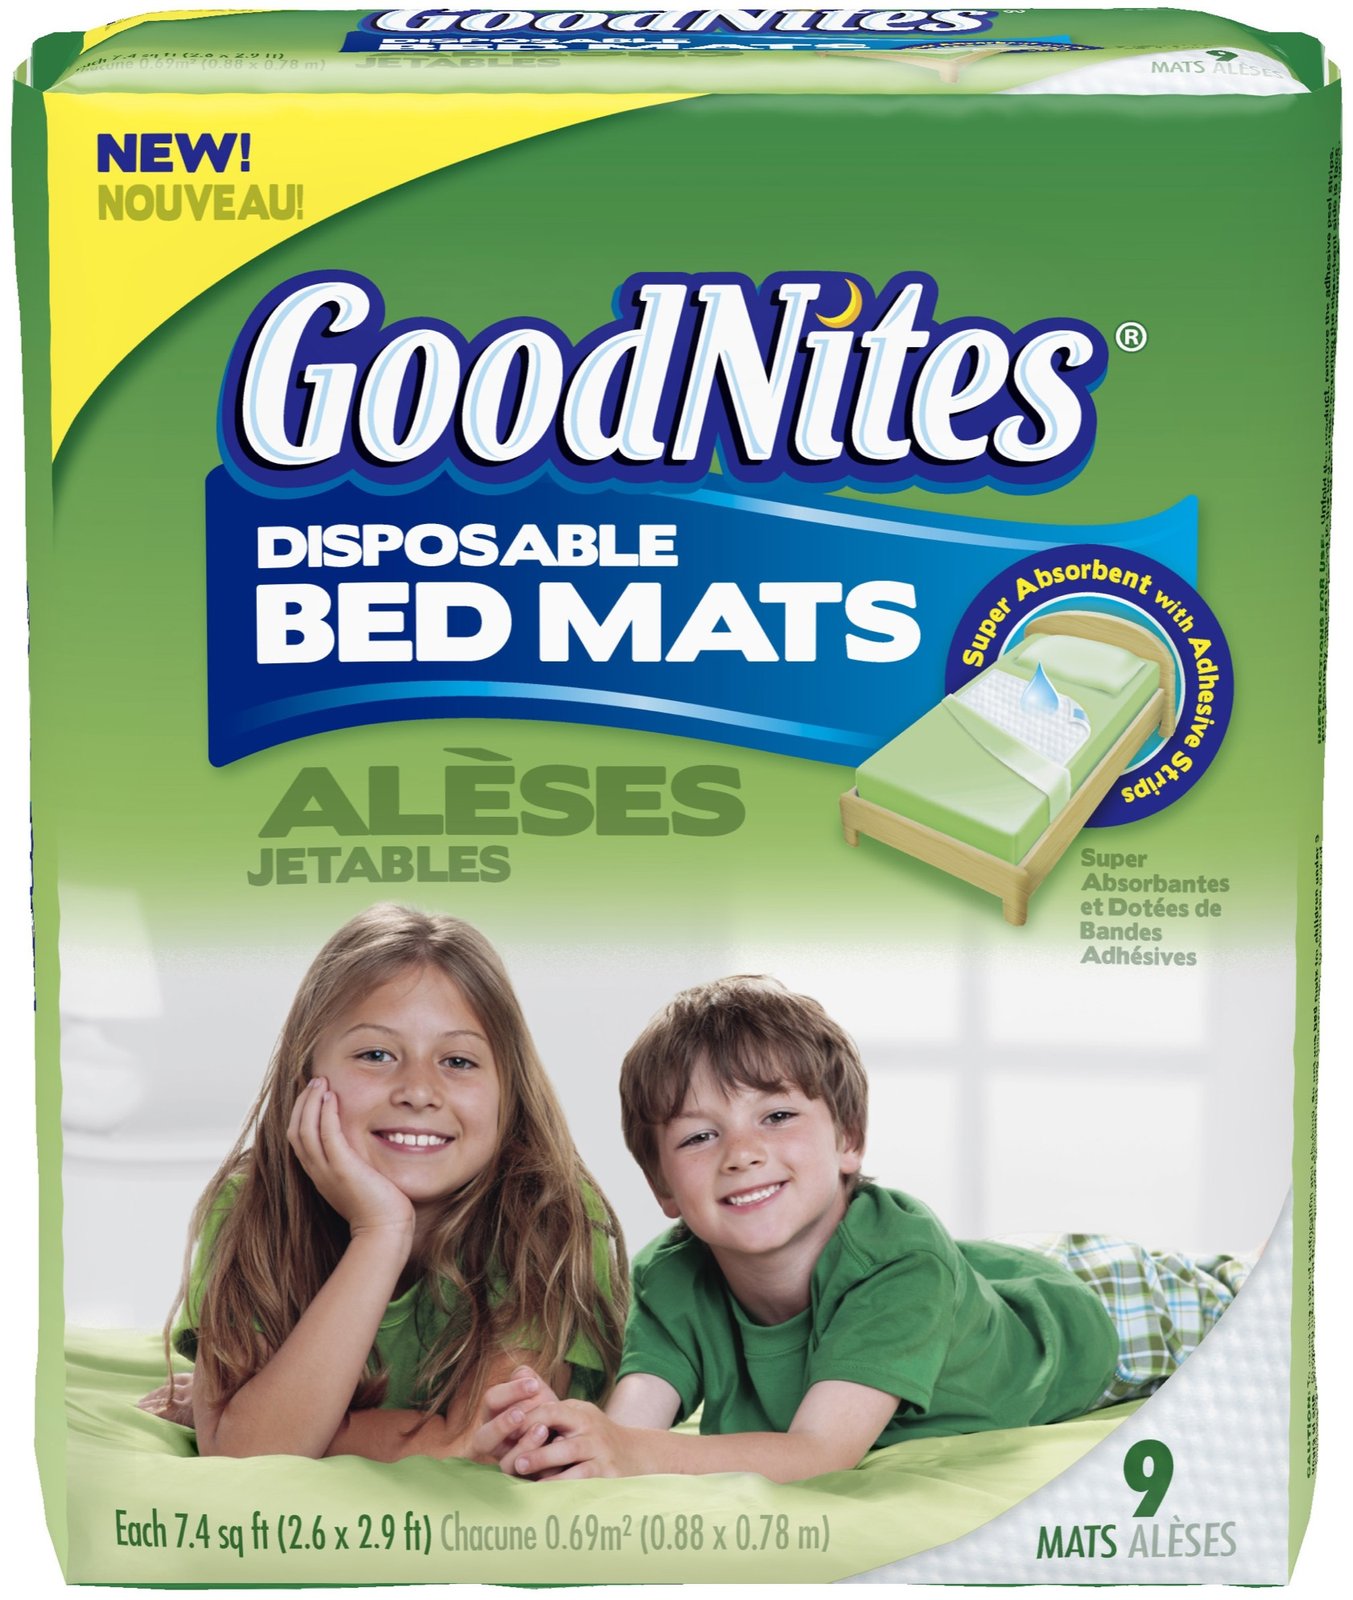 Goodnites bed mats